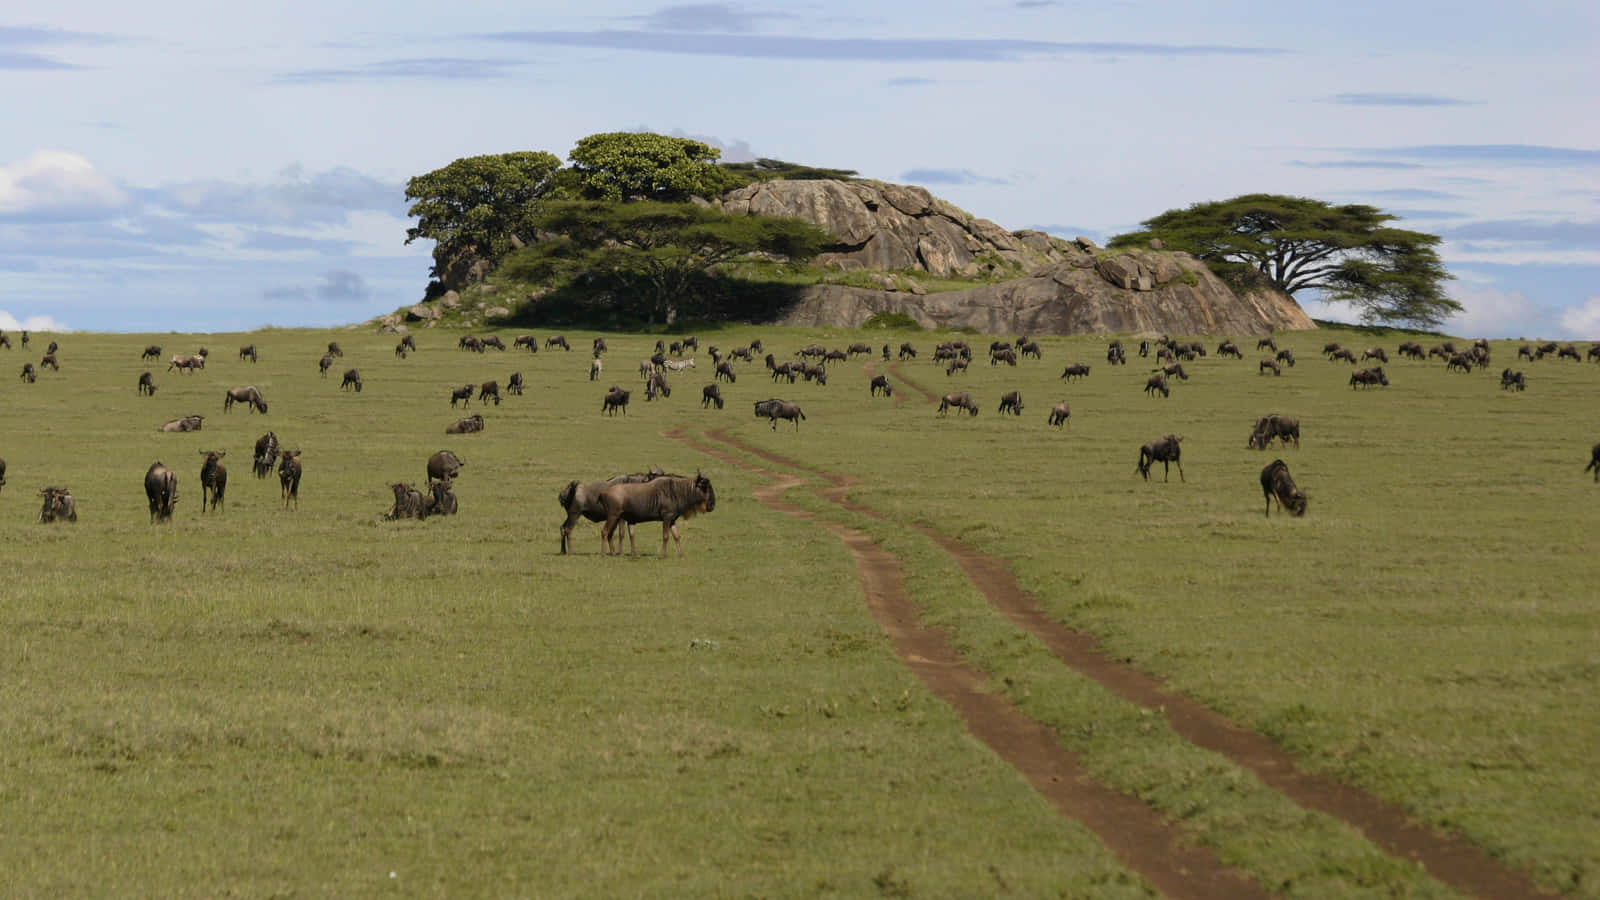 Parquenacional Serengeti - Gnus Comendo Grama. Papel de Parede